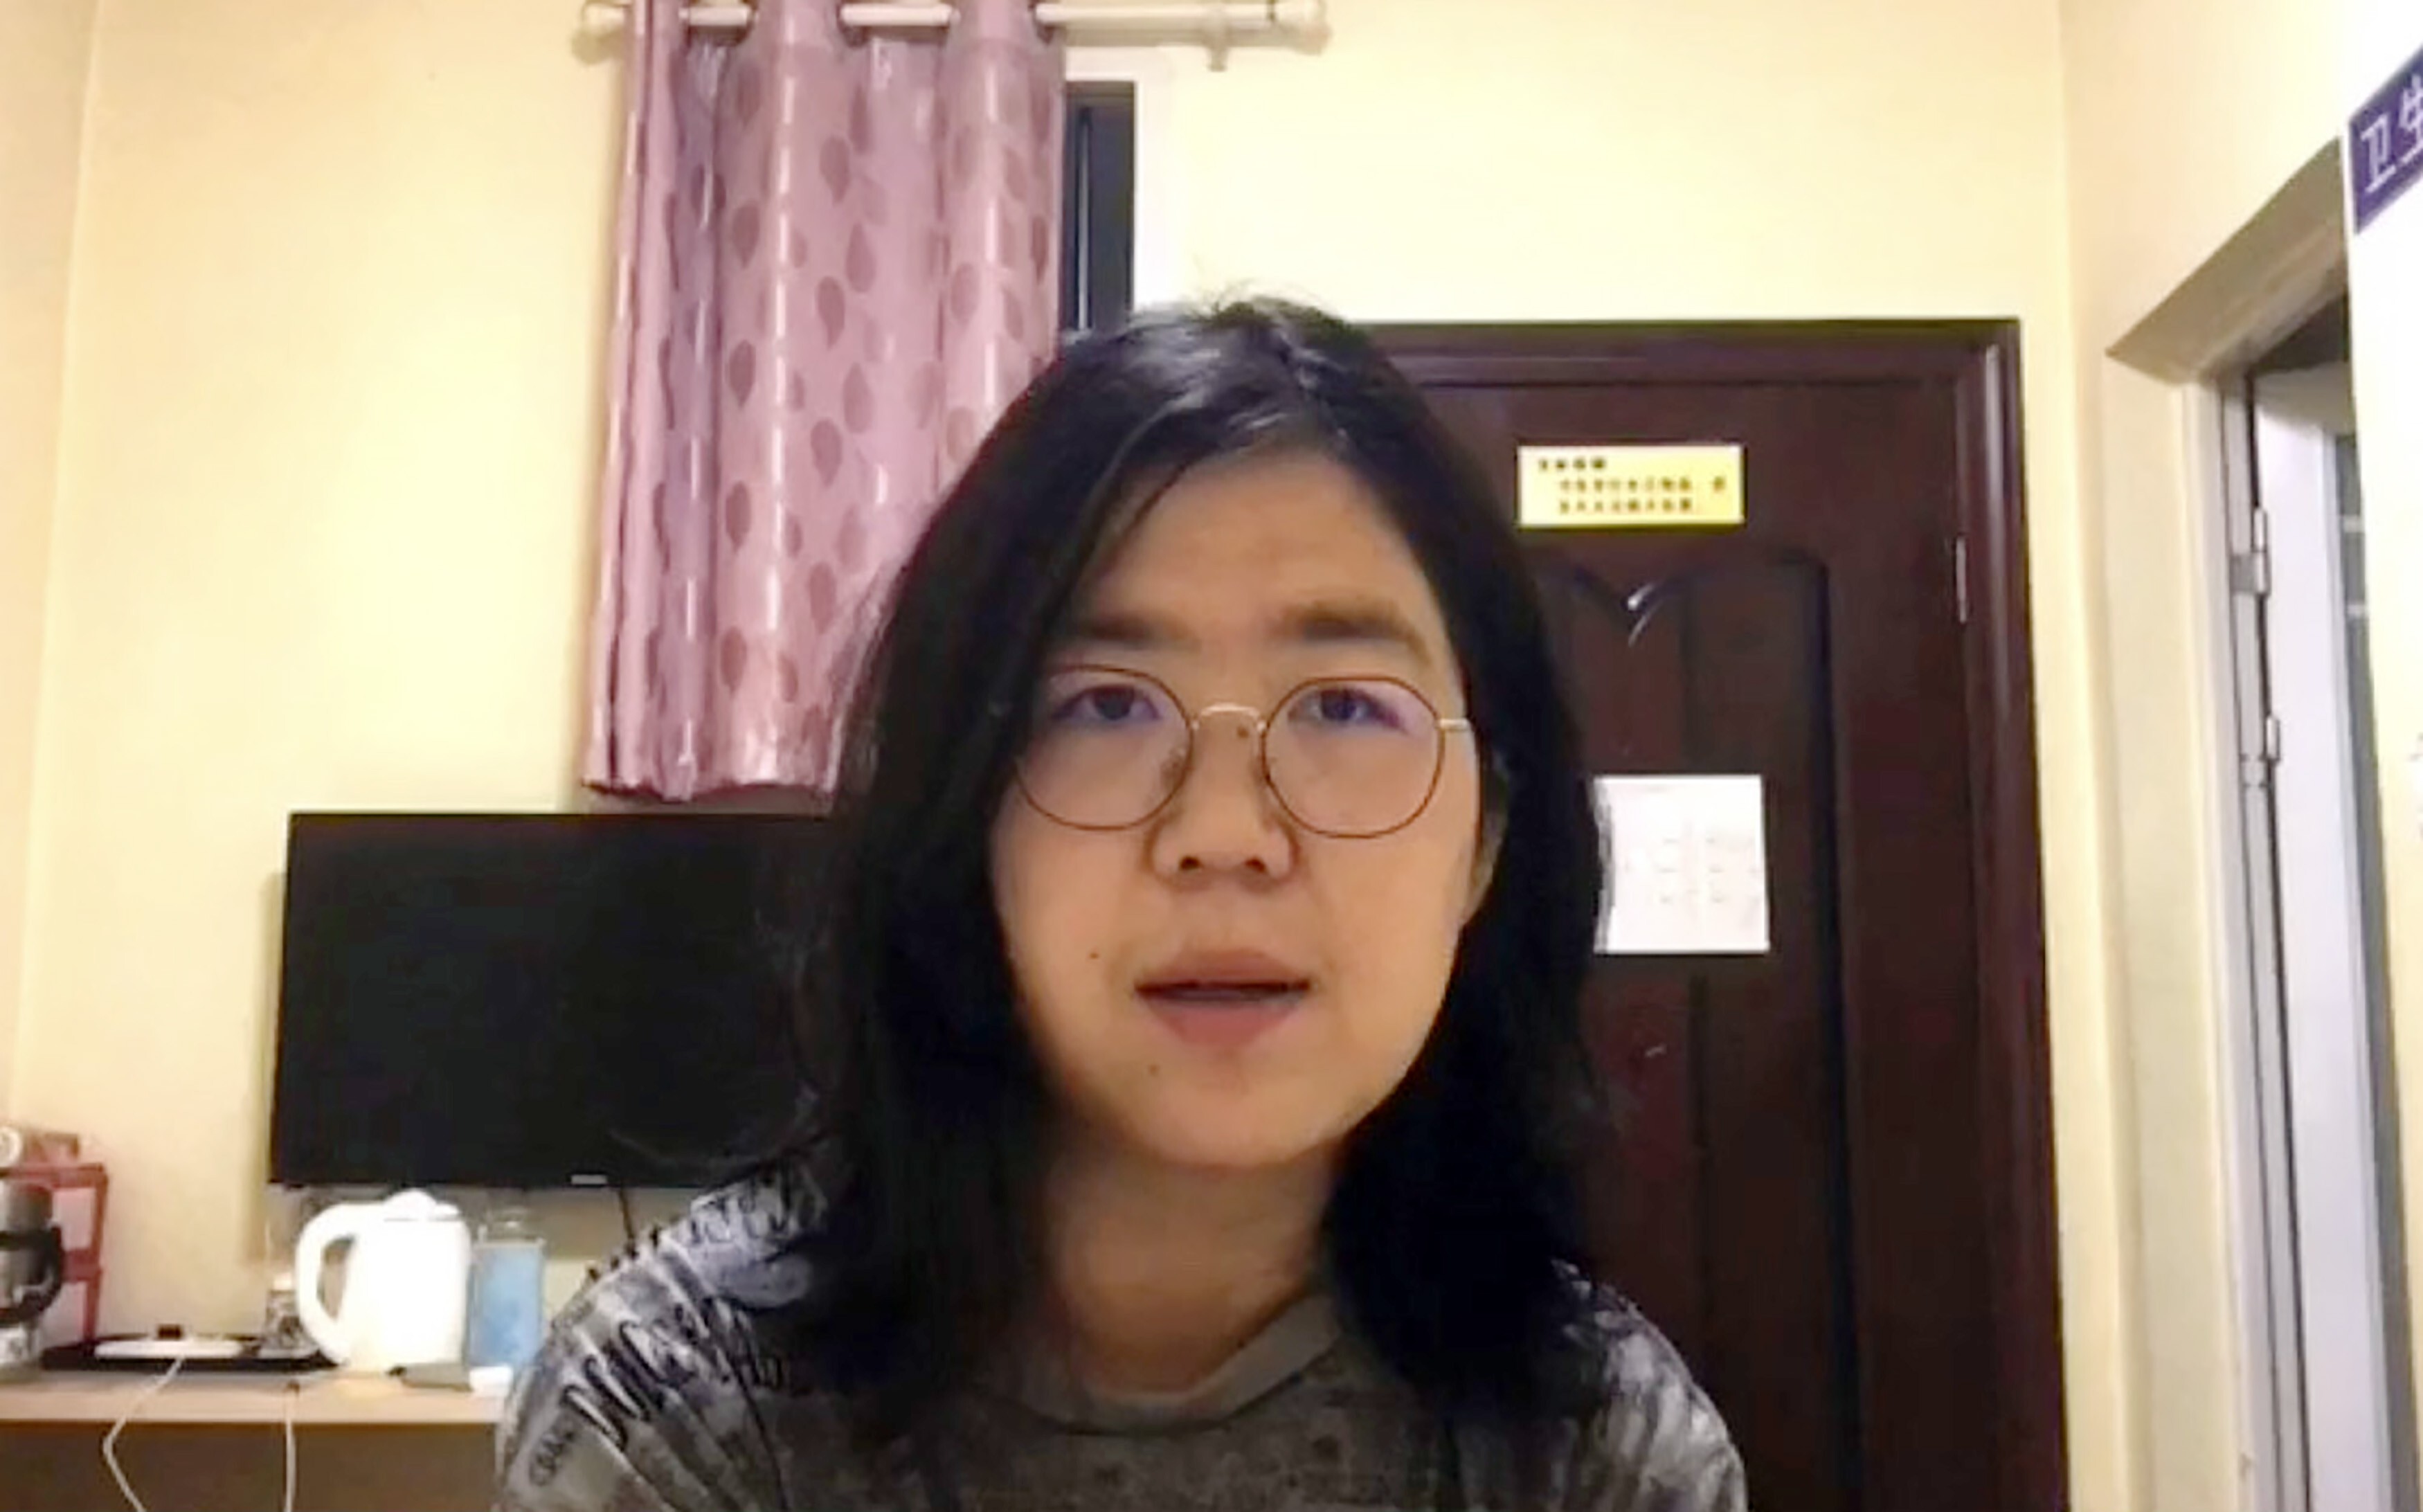 https://www.scmp.com/news/china/politics/article/3115529/coronavirus-citizen-journalist-china-sentenced-four-years-jail